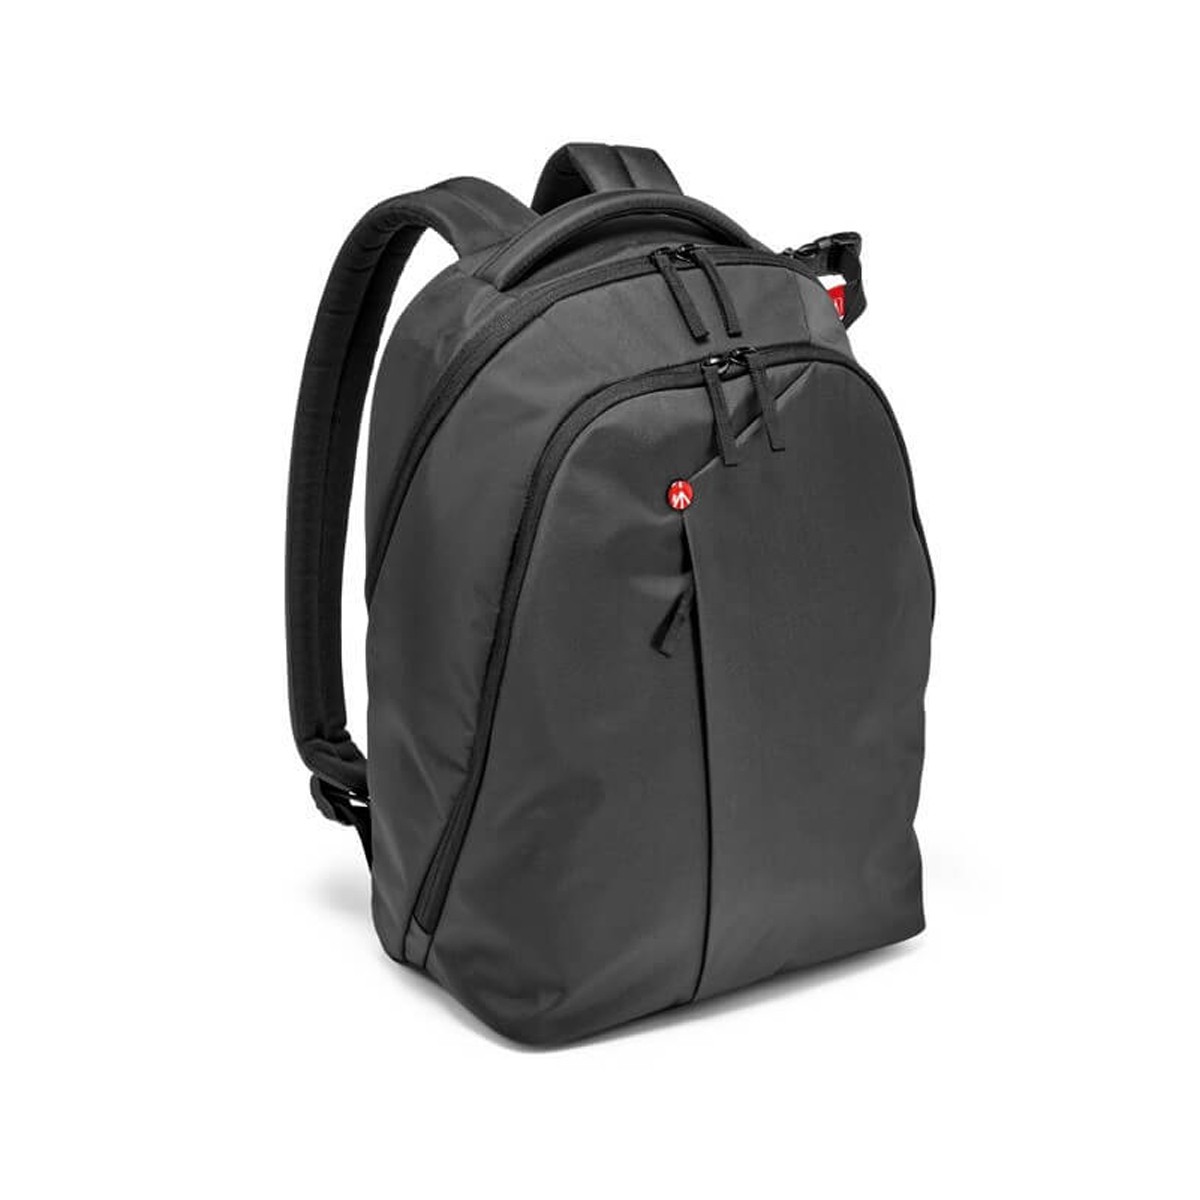 NX camera and laptop backpack V Grey for DSLR CSC